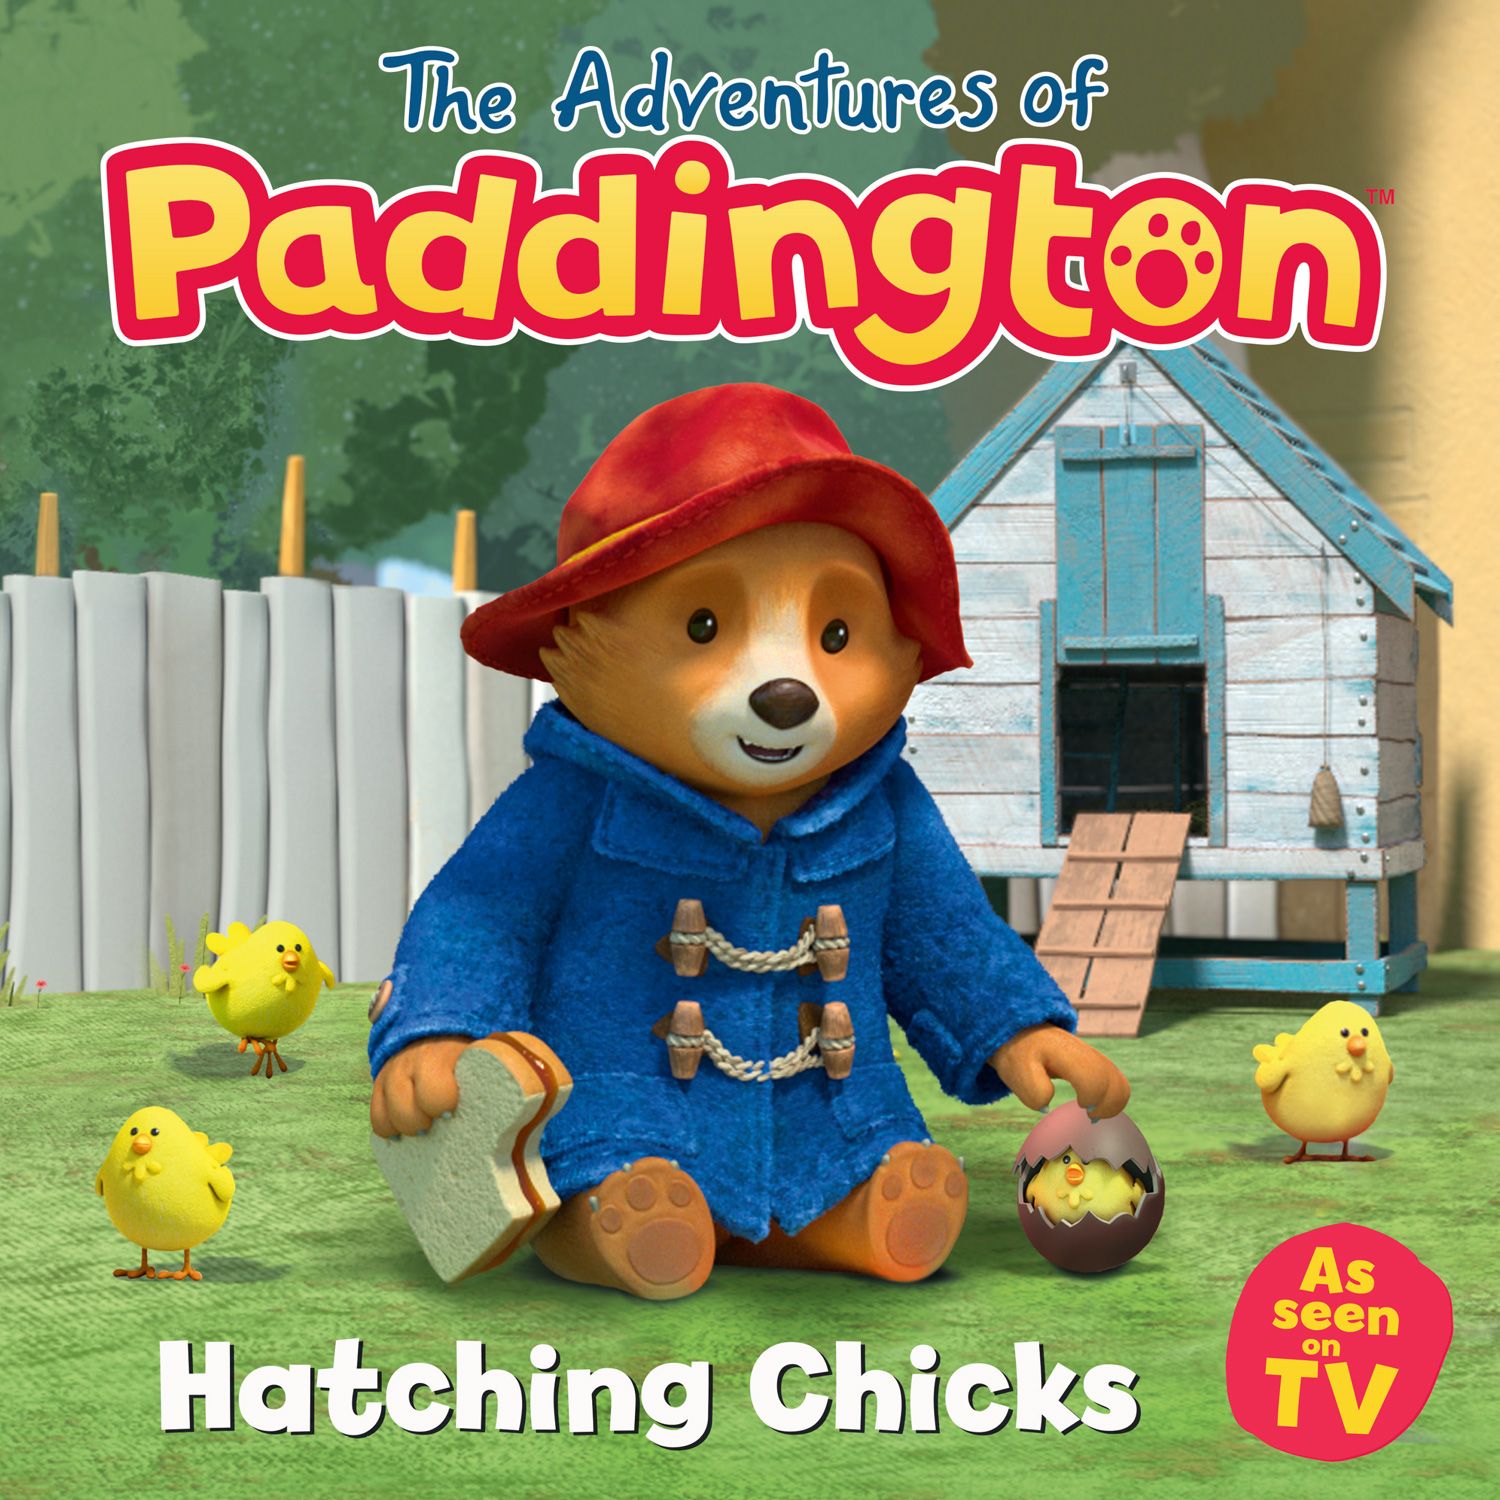 published children's books uk